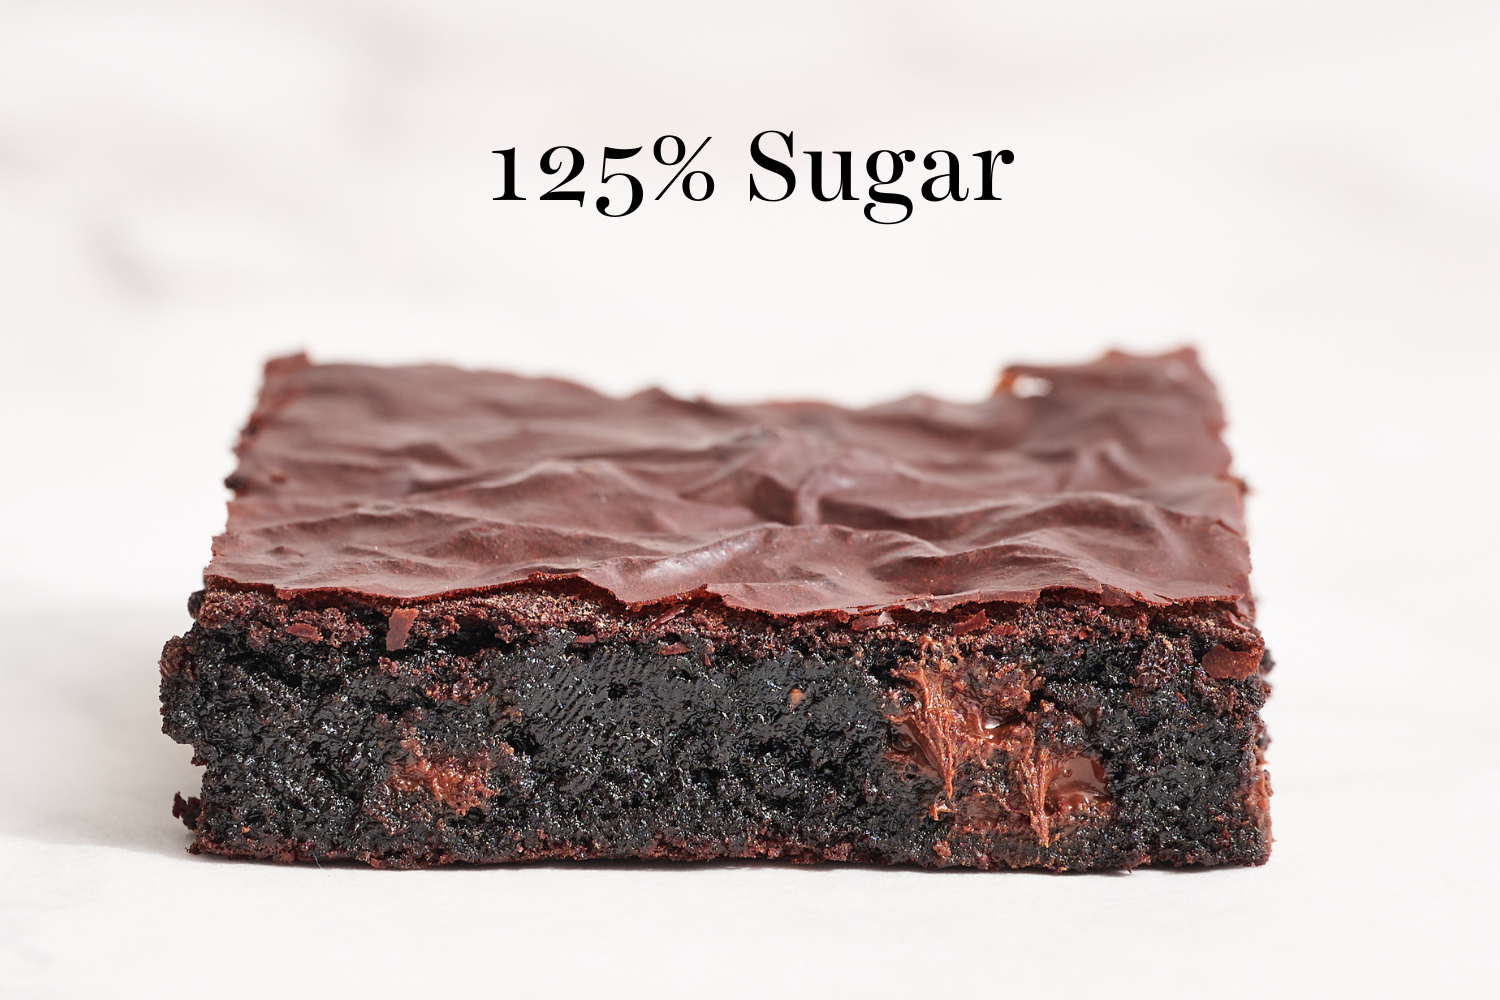 a slice of the 125% sugar brownies.